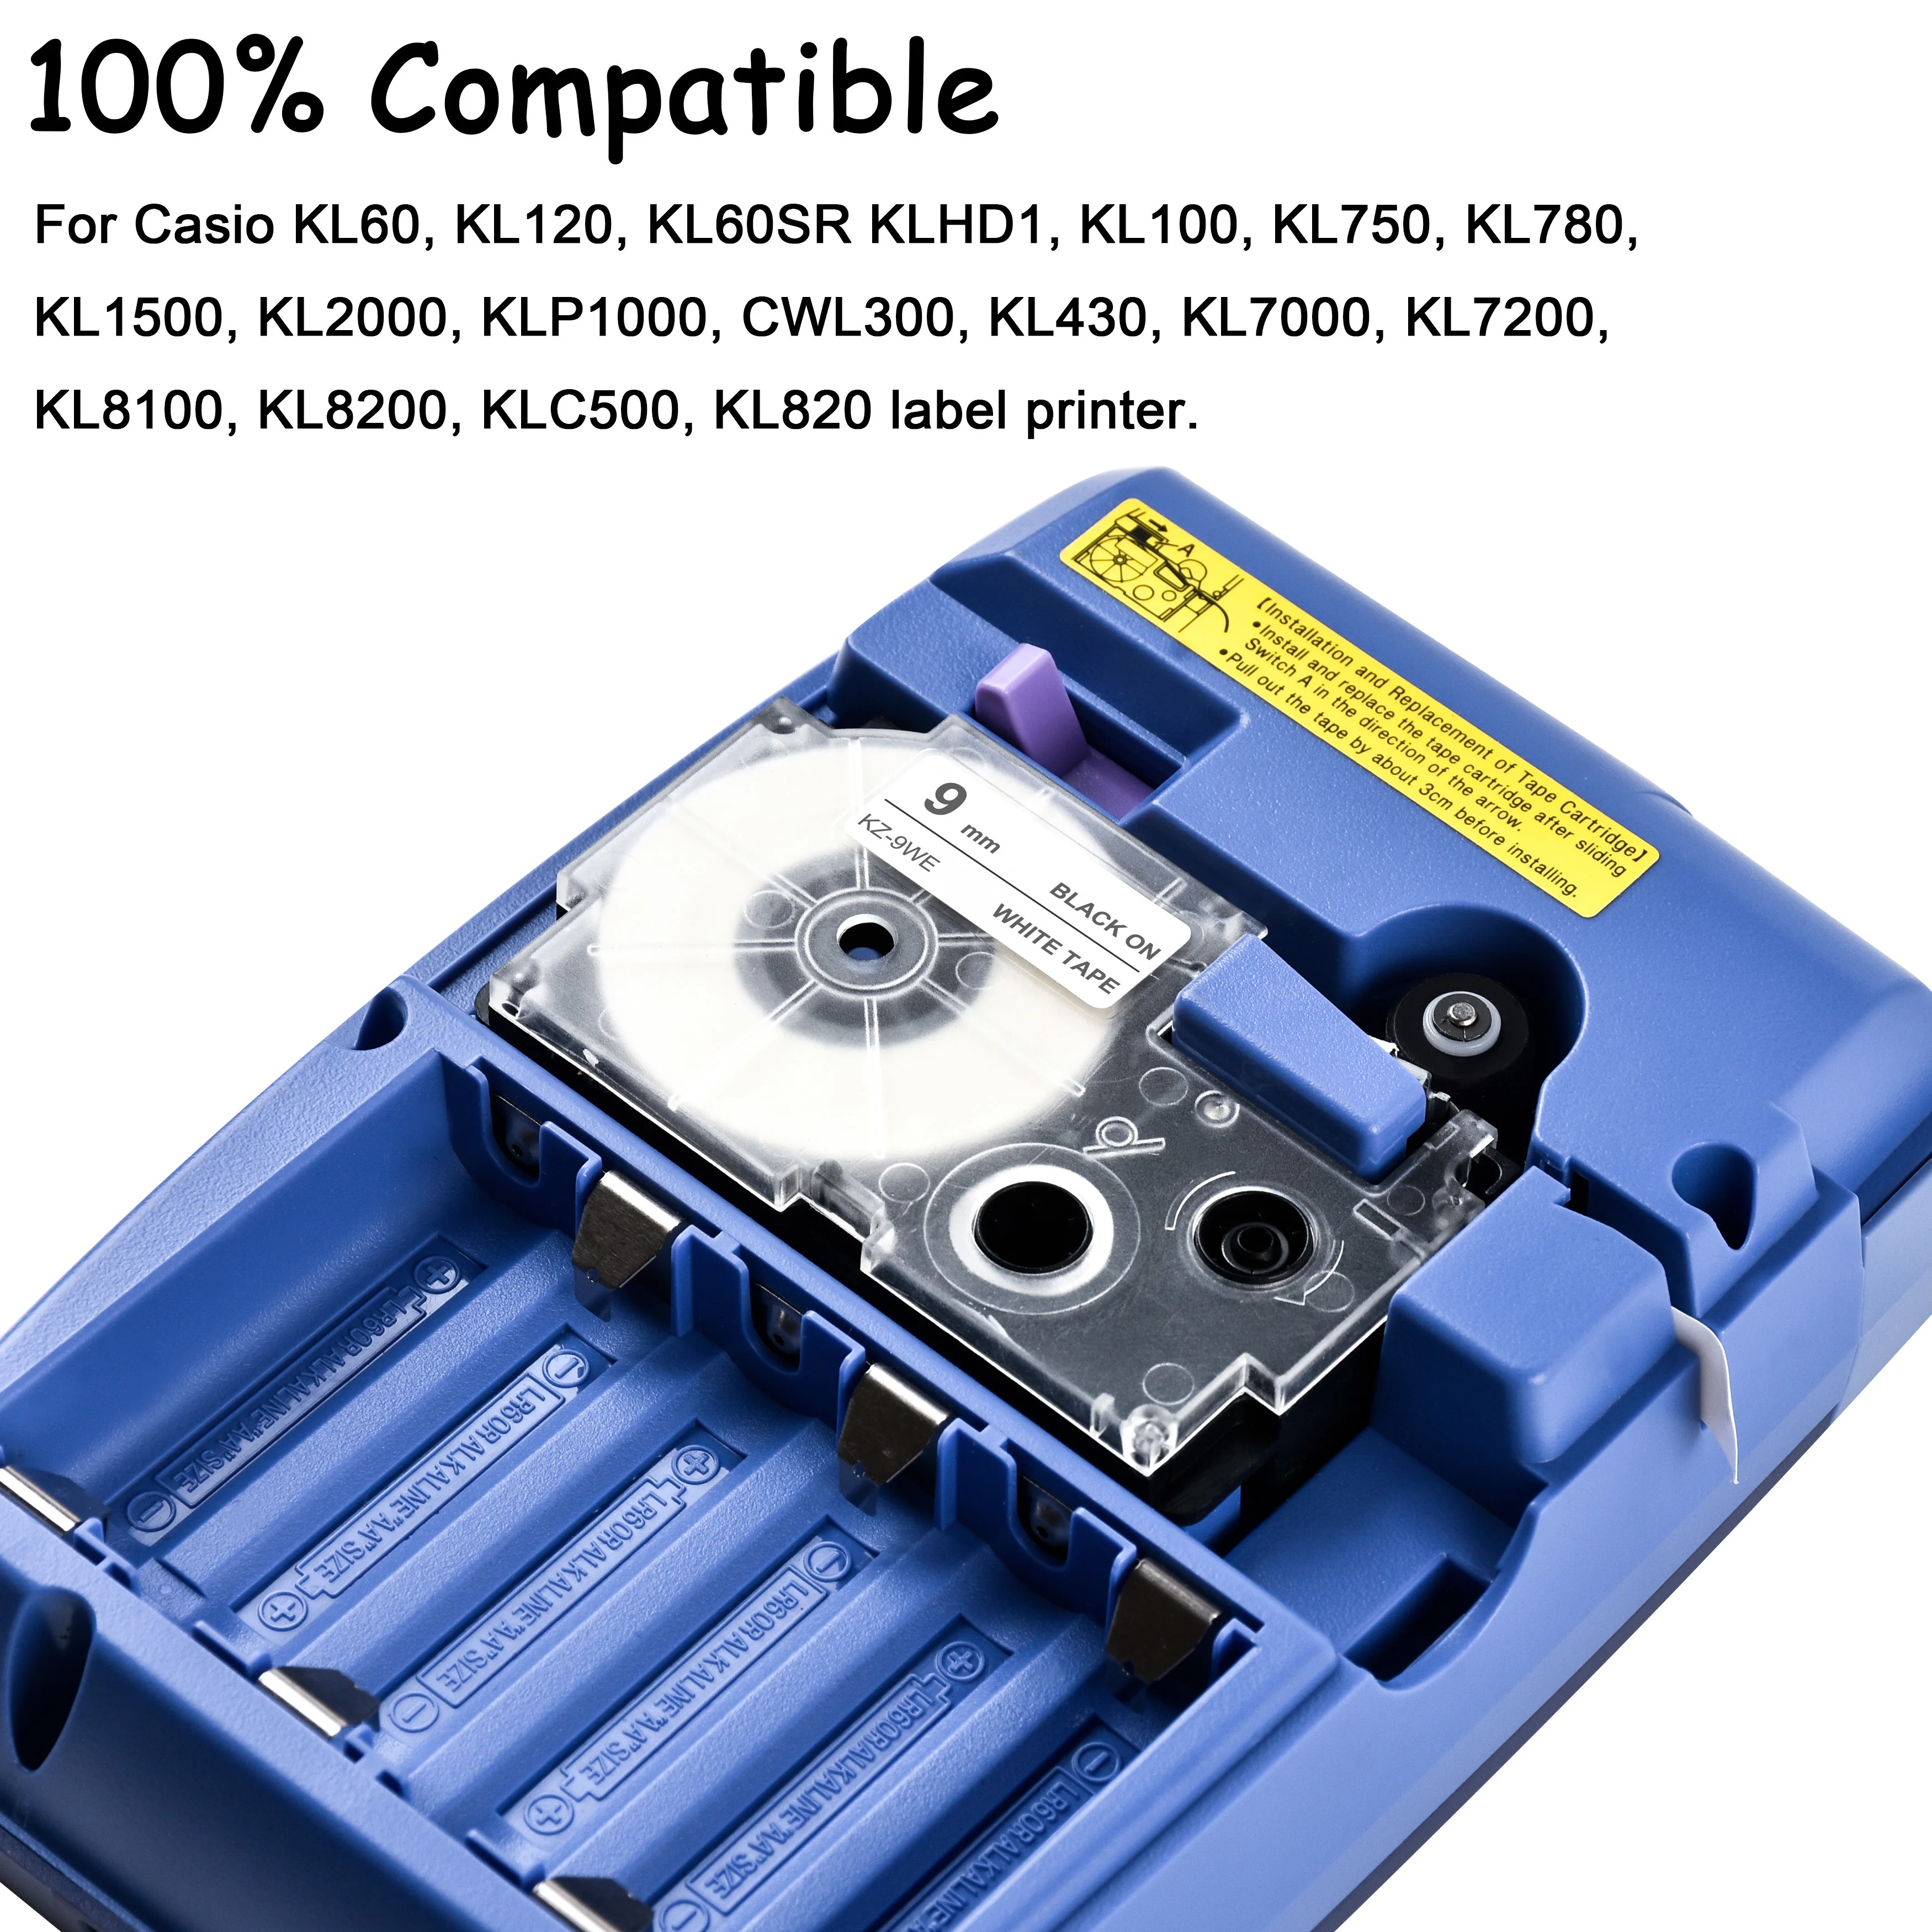 Casete de Cinta compatible con Casio XR-12BU XR-12BU1 Negro sobre Azul 12mm x 8m para Casio KL-60 70E 100 100E 120 200 200E 300 750 780 820 2000 7000 7200 7400 8100 8200 P1000 C500 CW-L300 